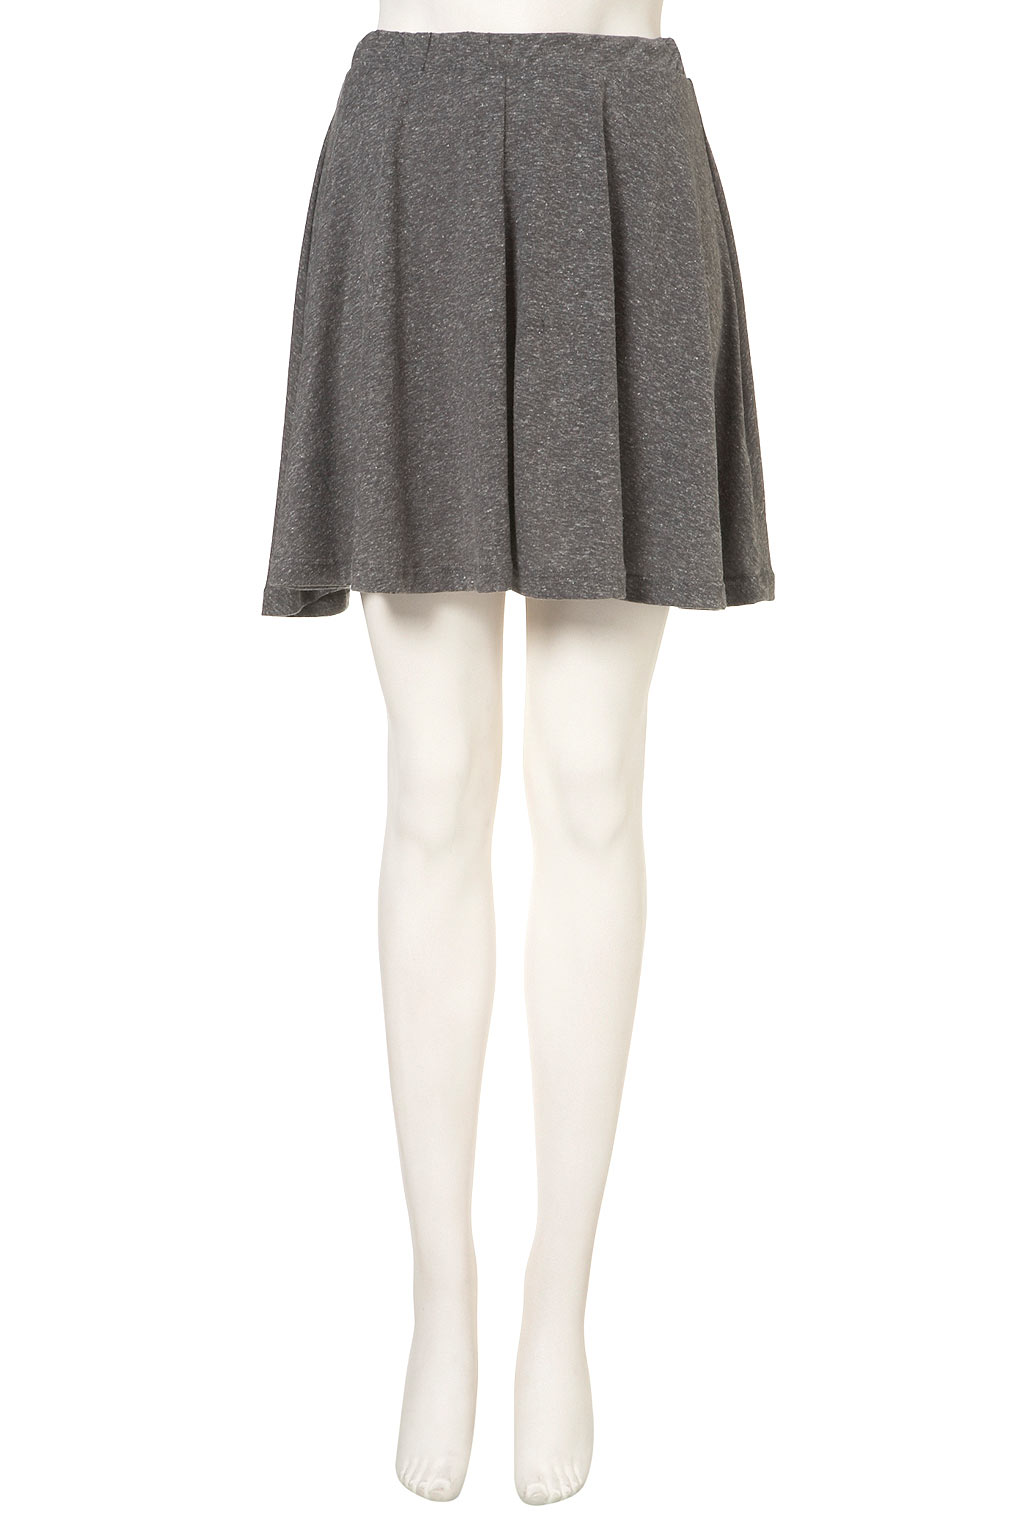 Lyst Topshop Grey Marl Speckle Skater Skirt In Gray 